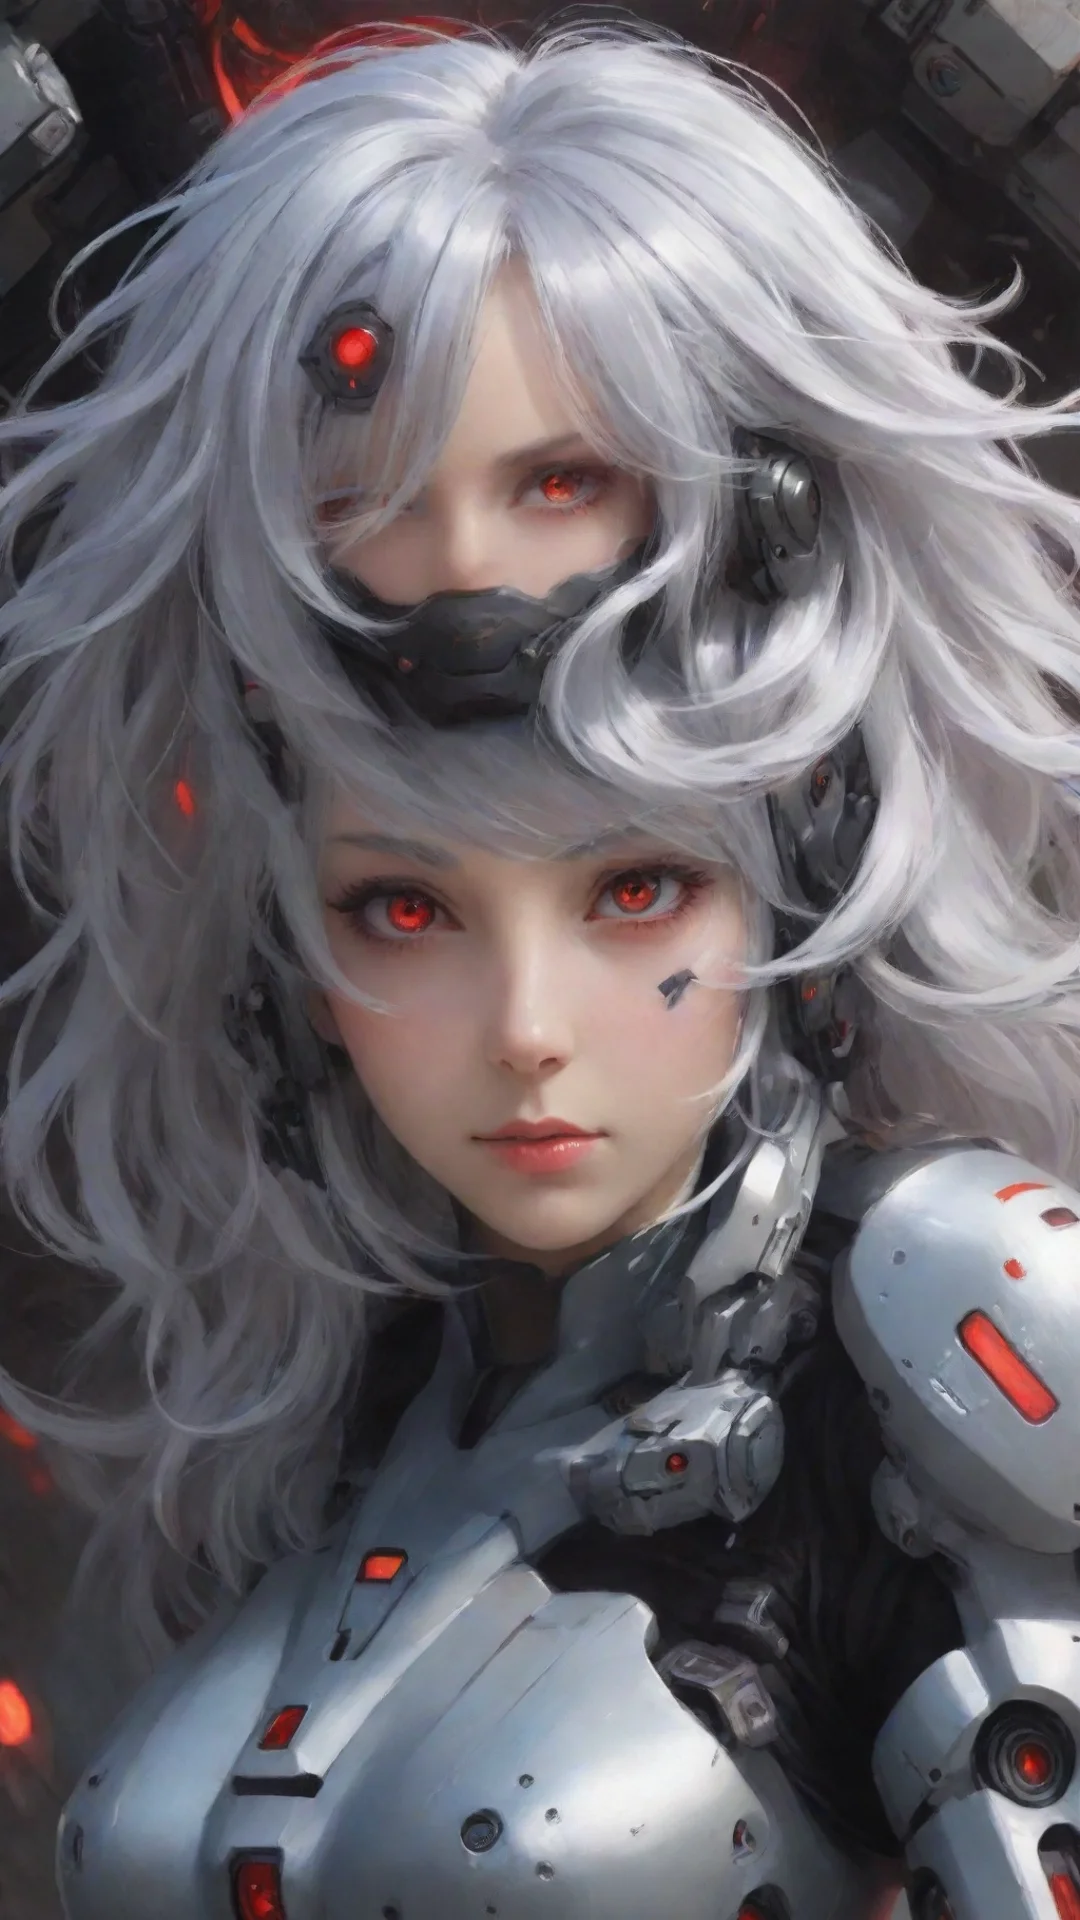 mecha pilot girl crimson eyes silver hair spaceship background tall